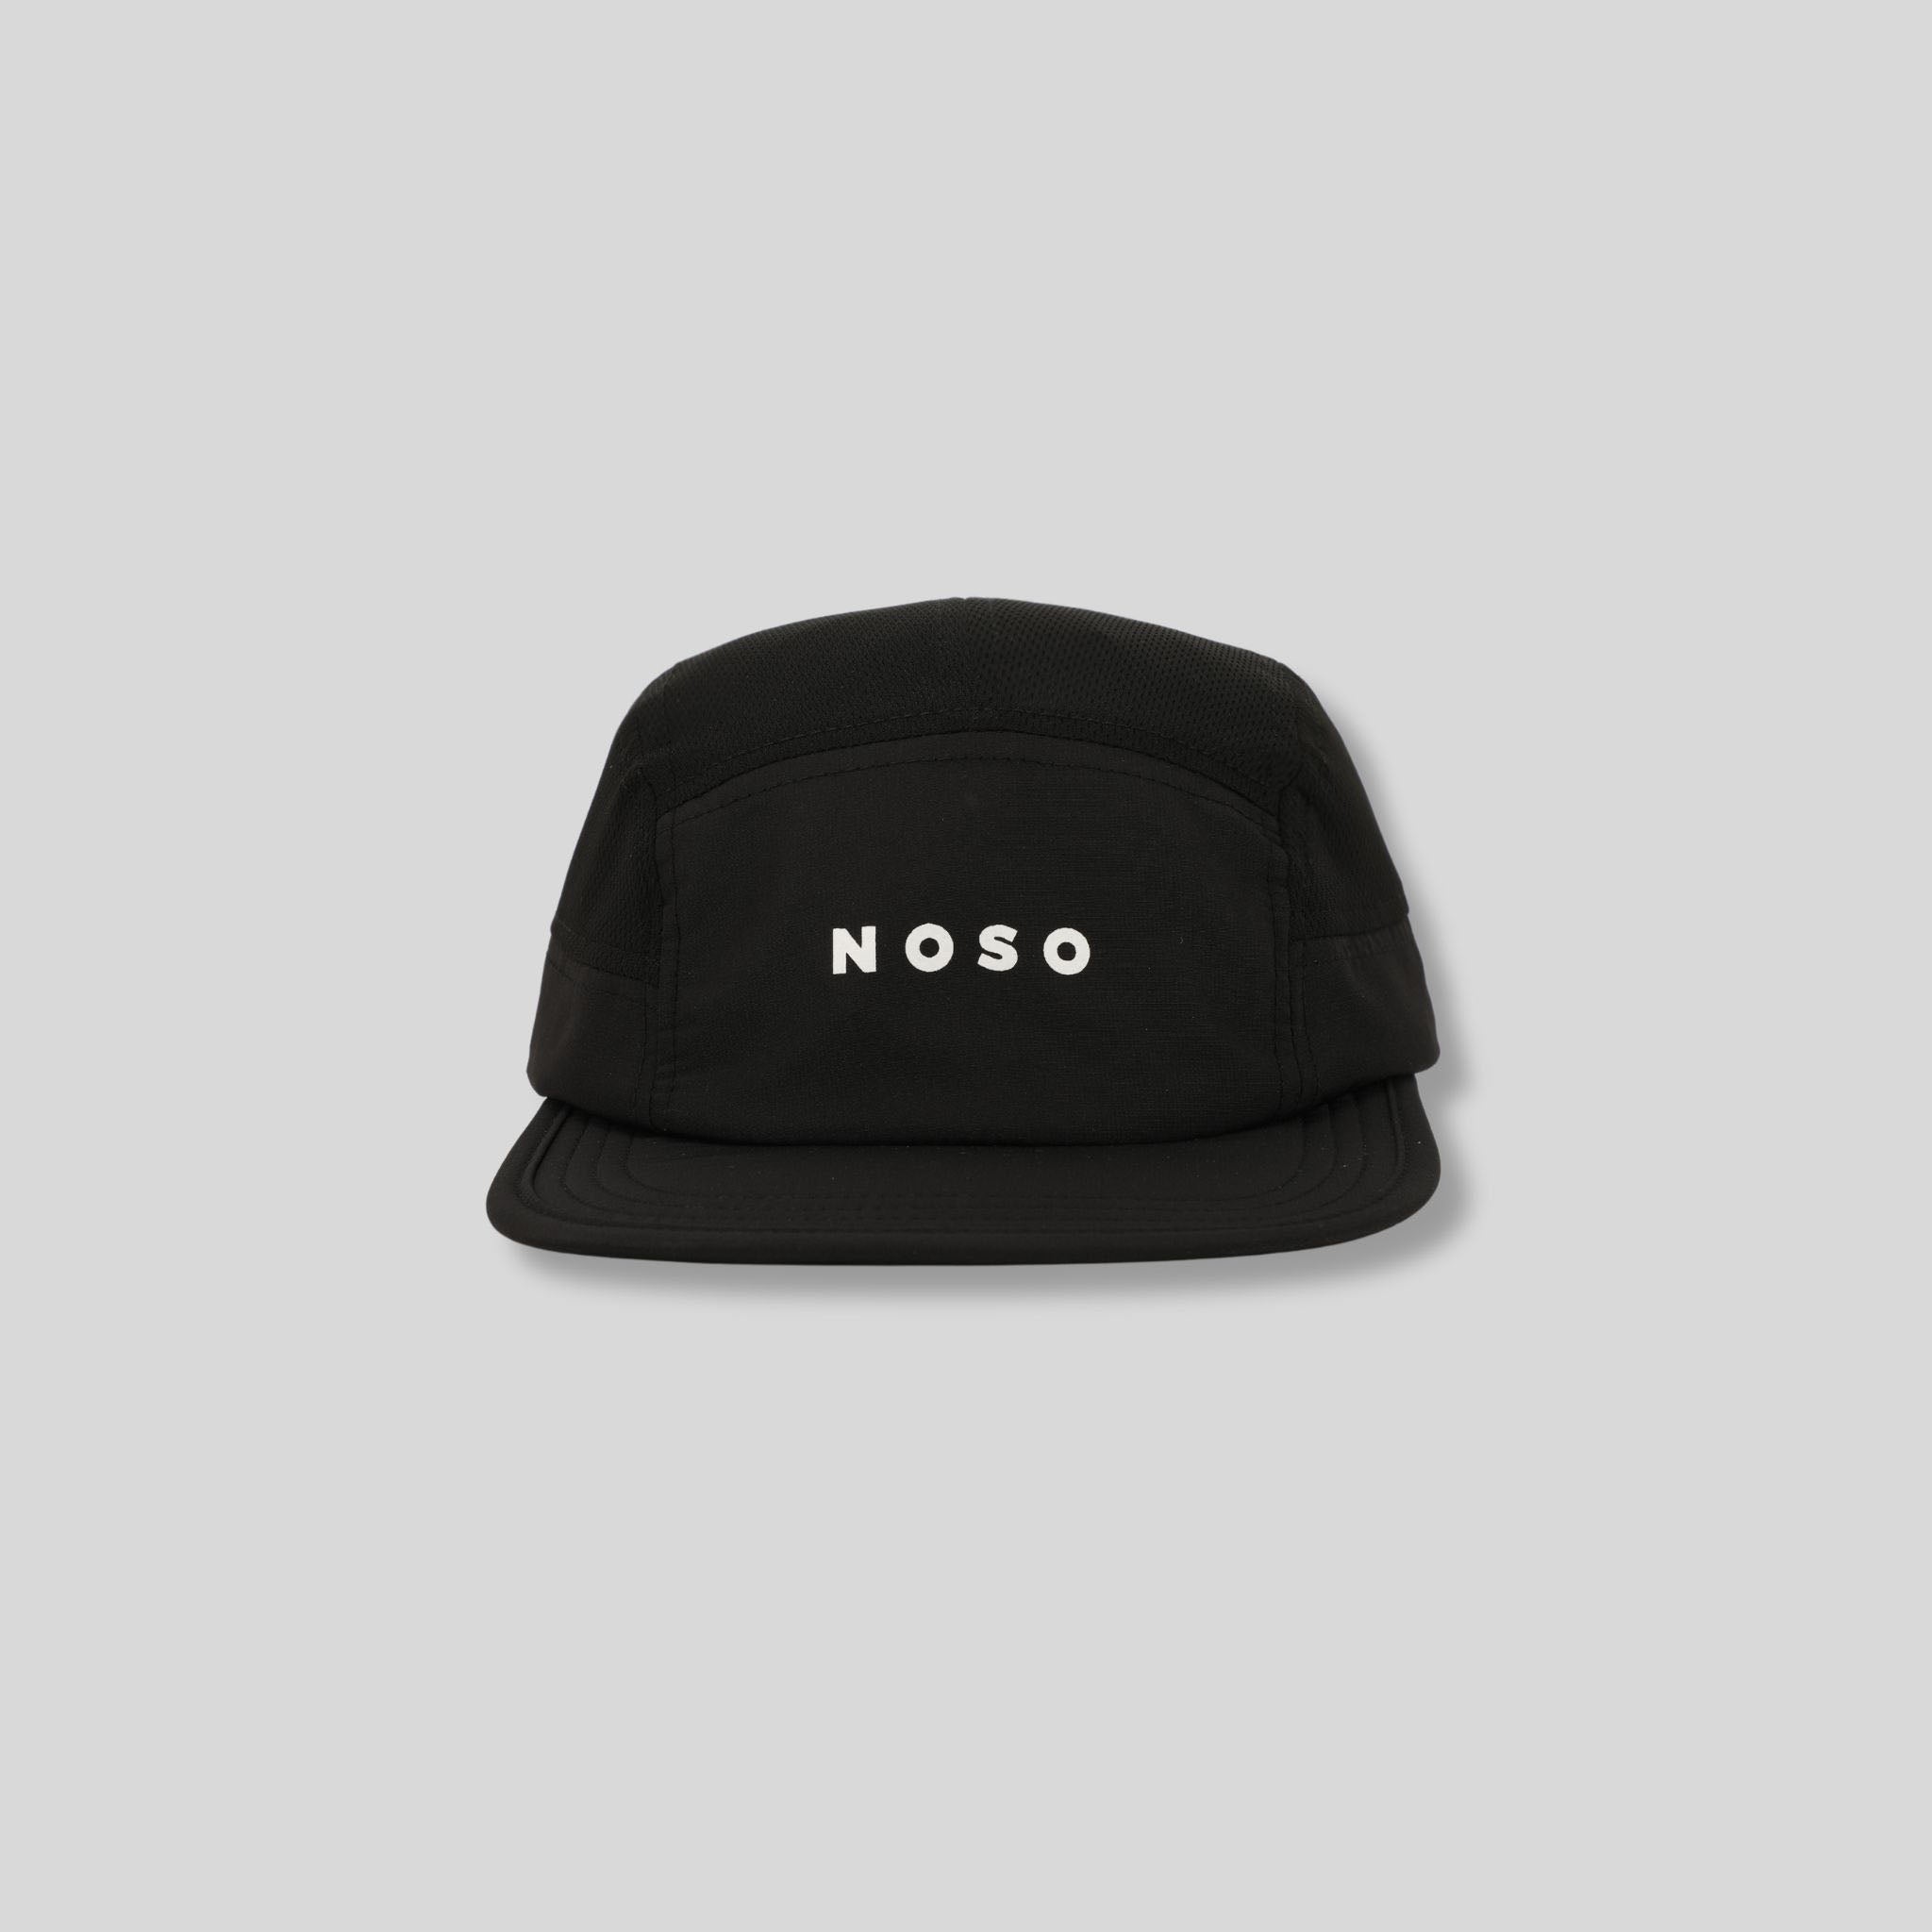 NOSO RUN/TRAIN PERFORMANCE CAP